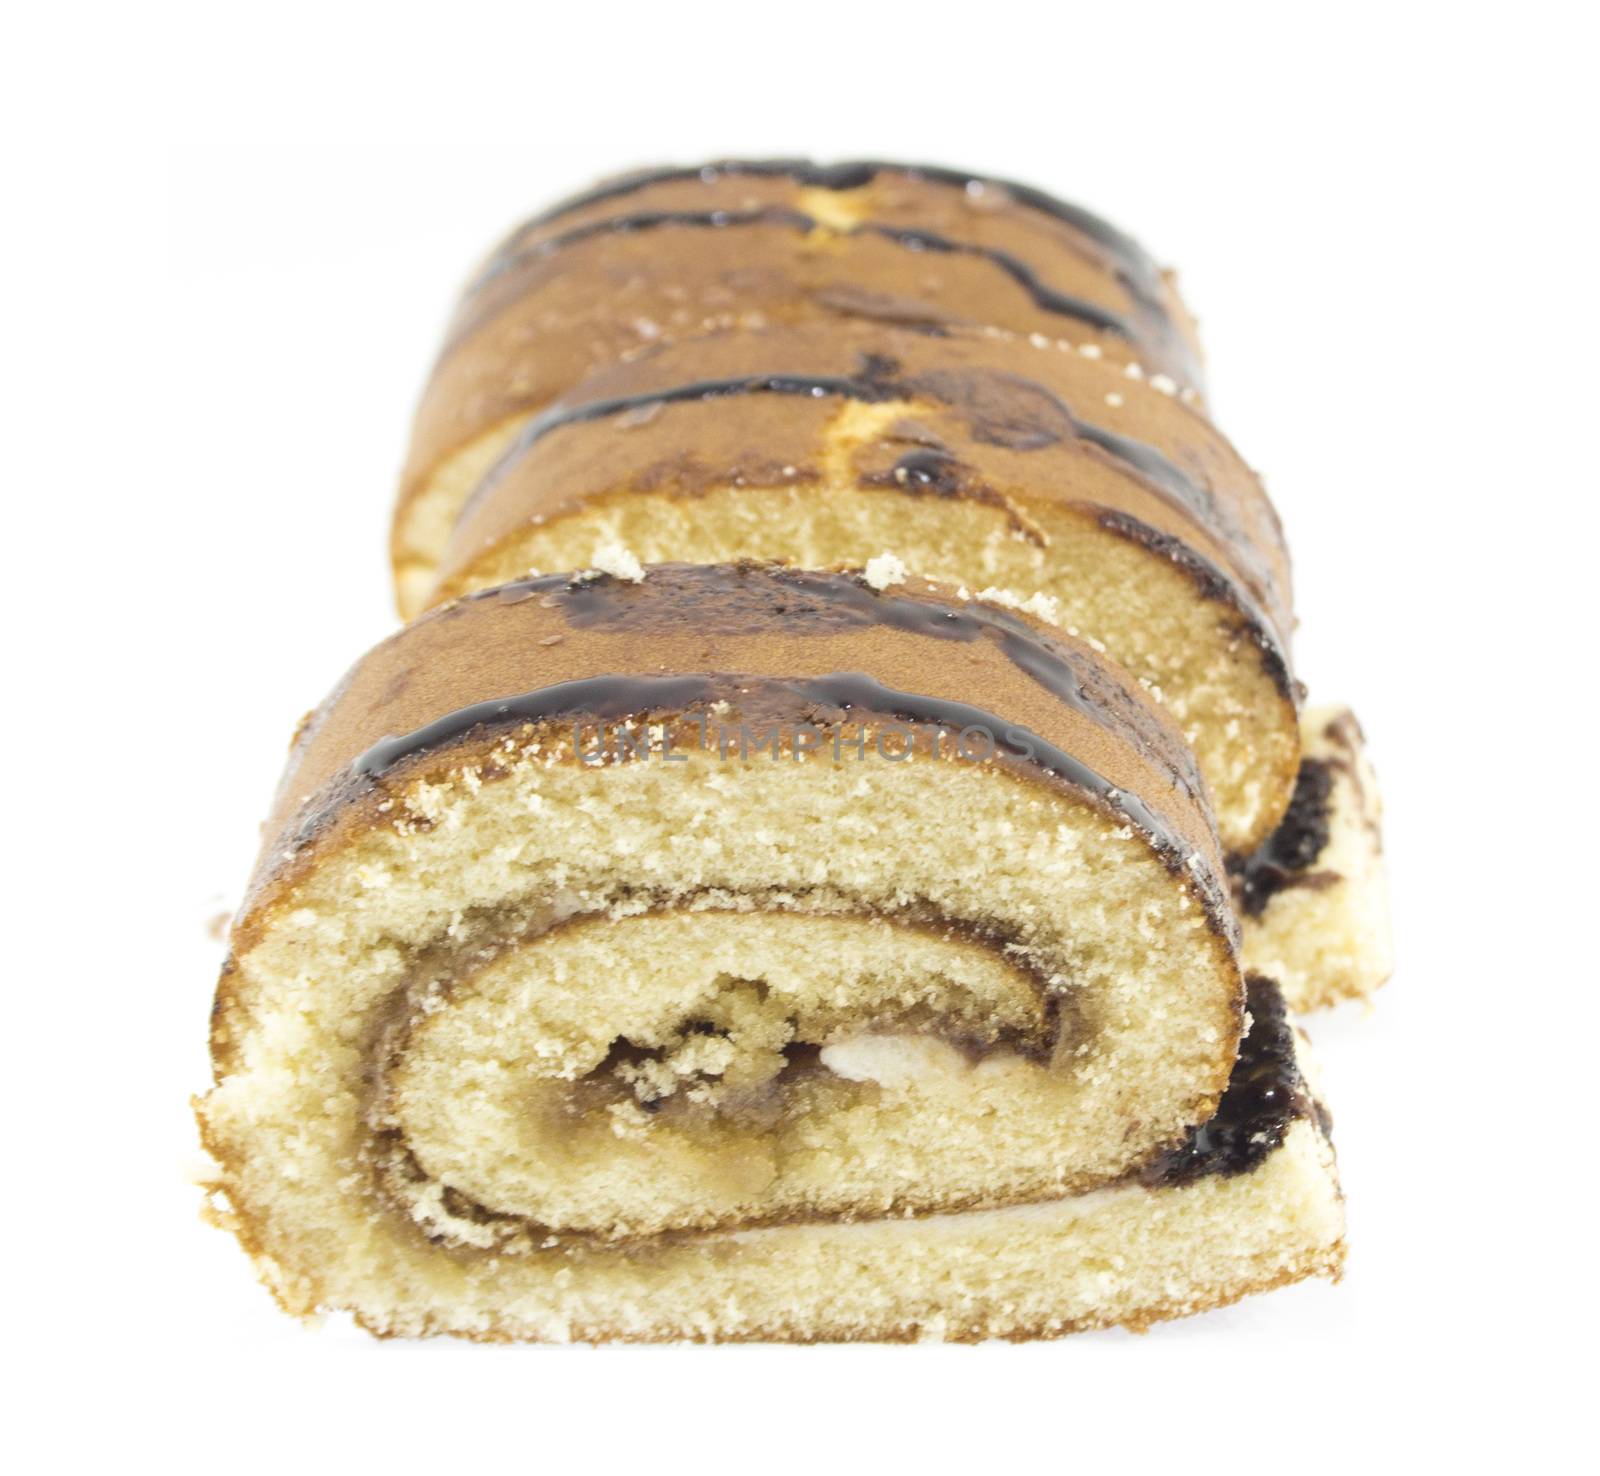 Sweet roll cake by designsstock